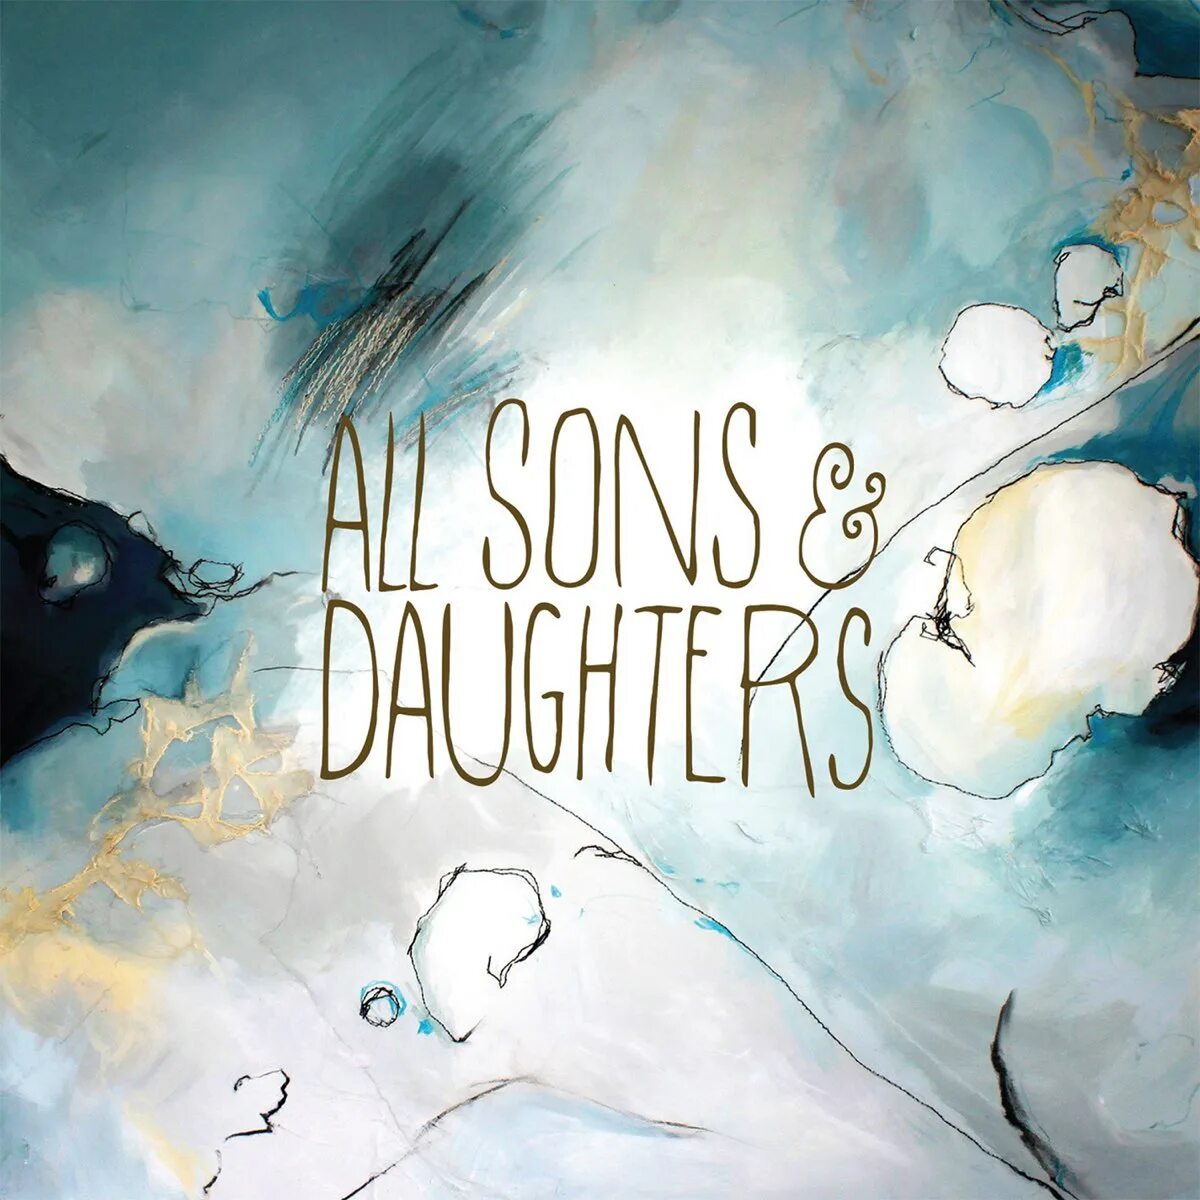 1 sons daughters. Daughter обложка. Queen son and daughter обложка песни. Daughter album Cover PNG.